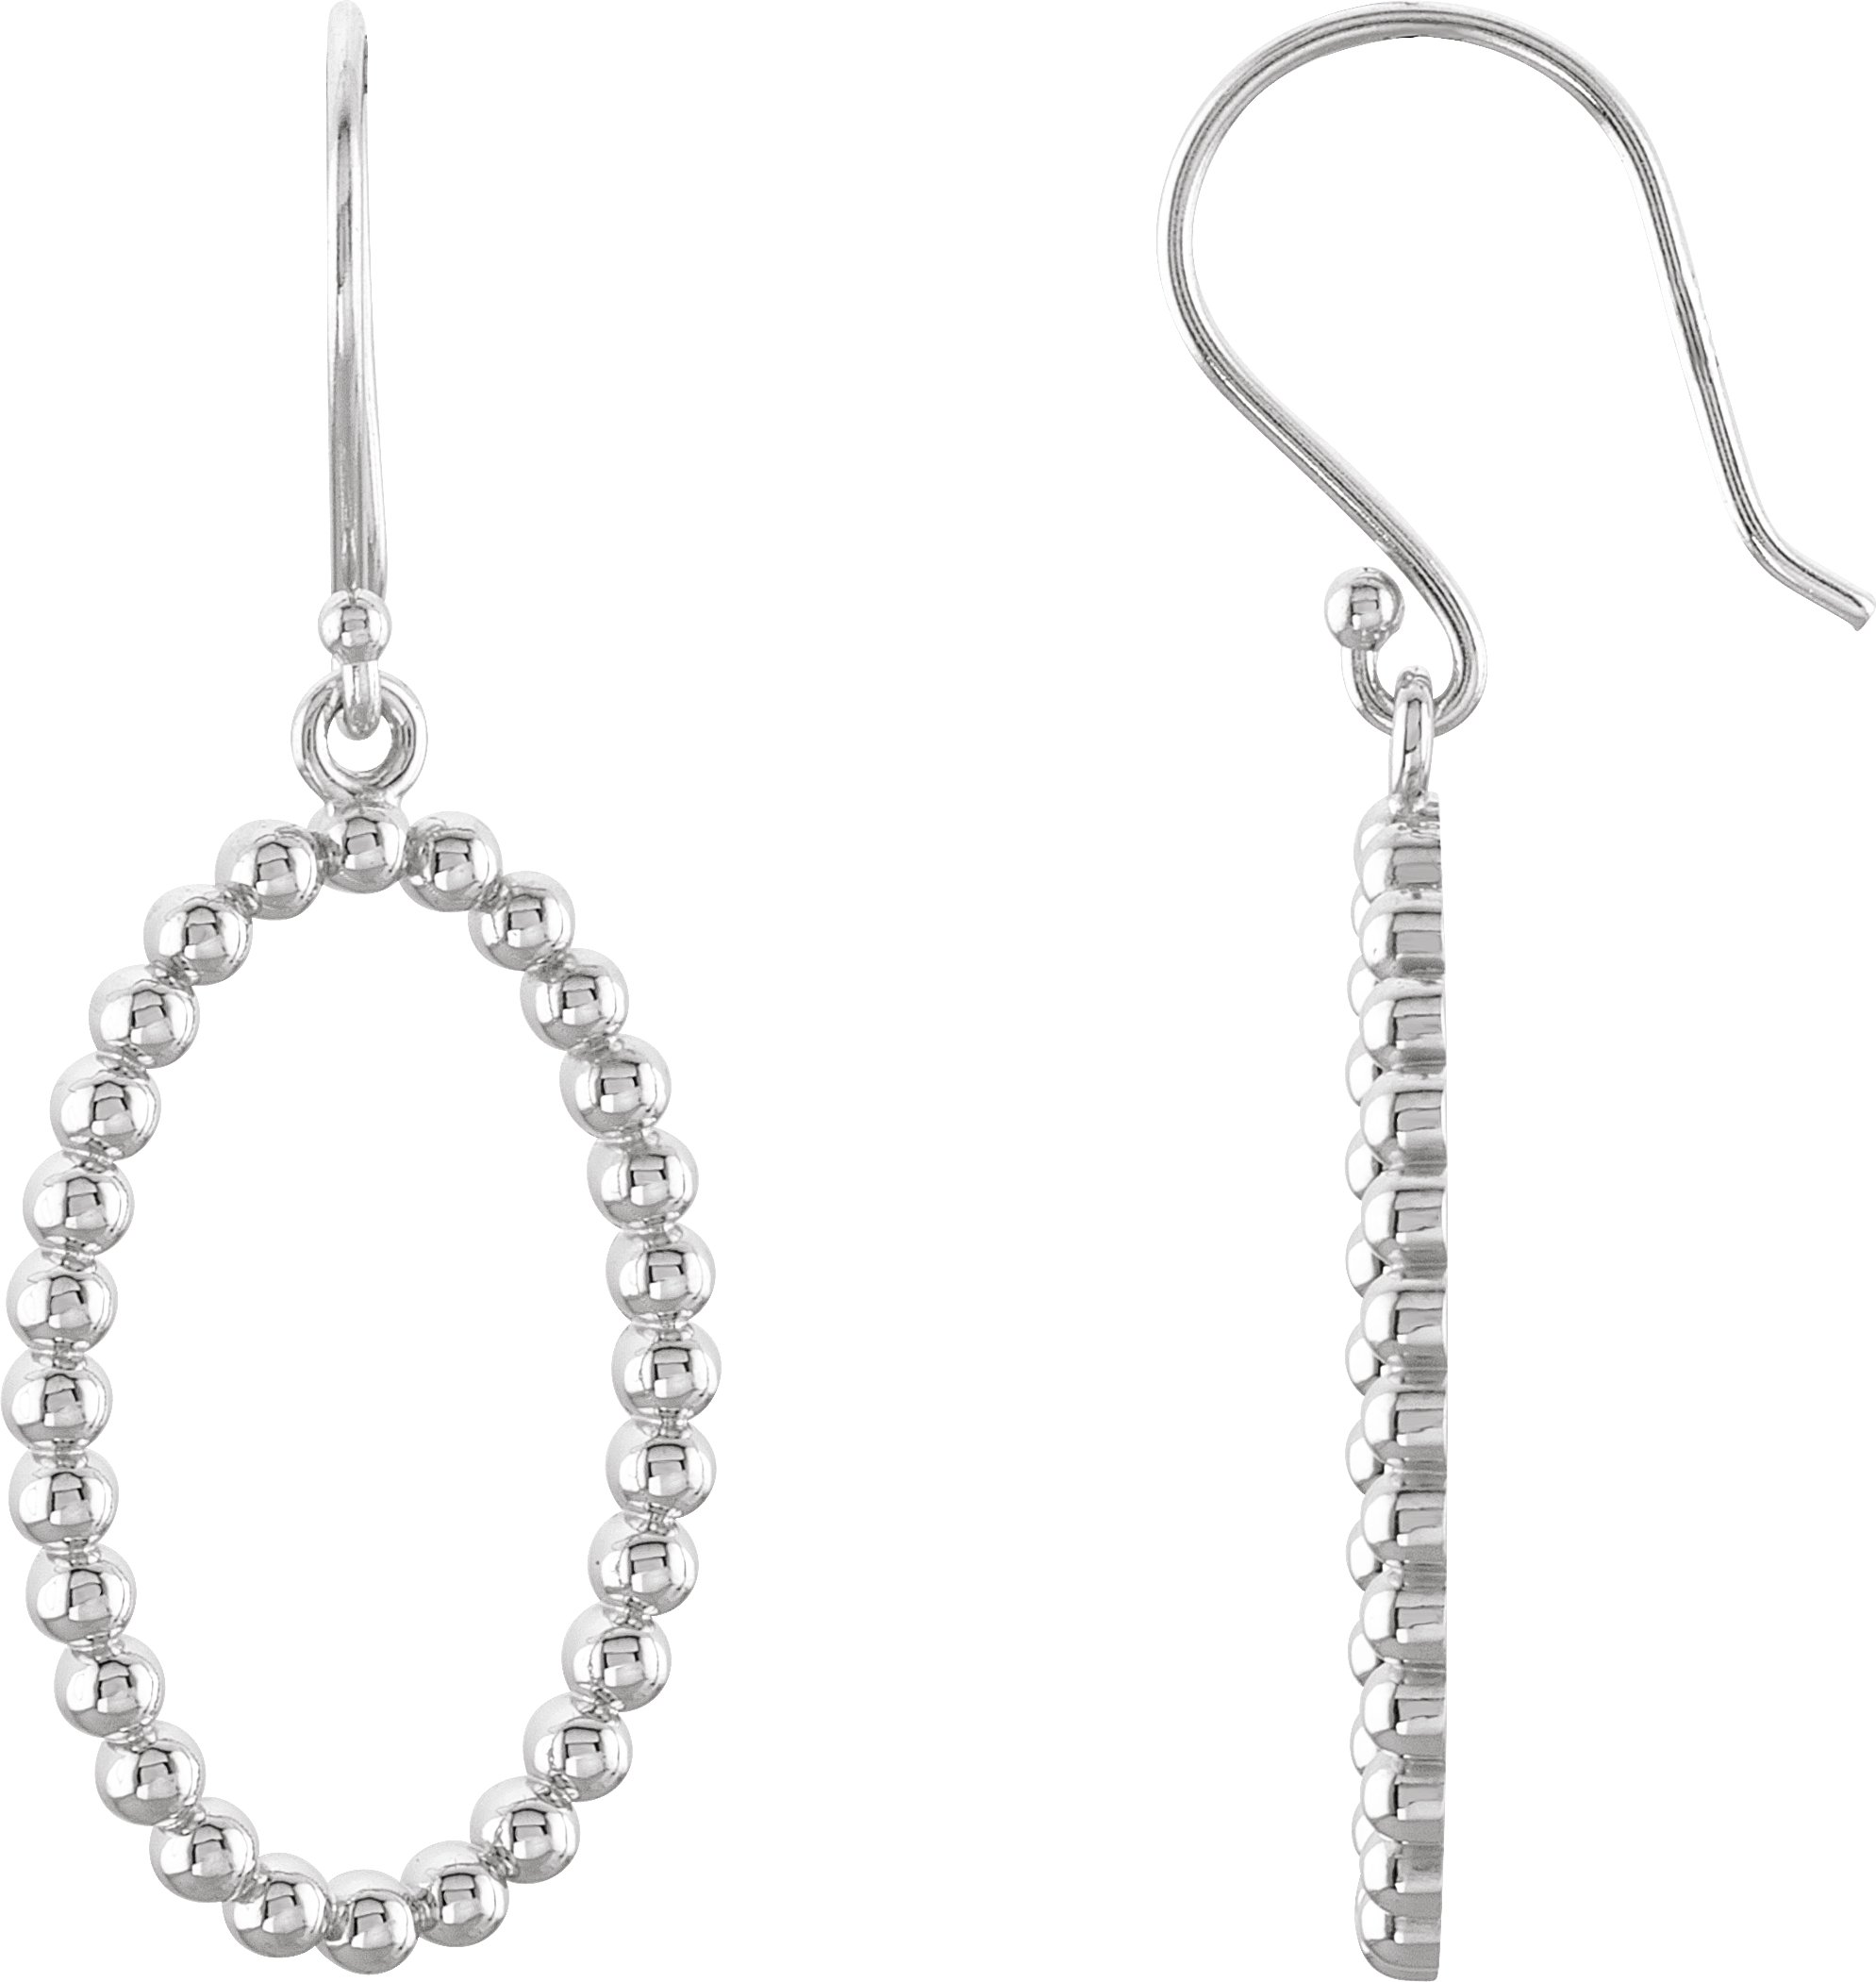 Sterling Silver Oval Beaded Design Earrings